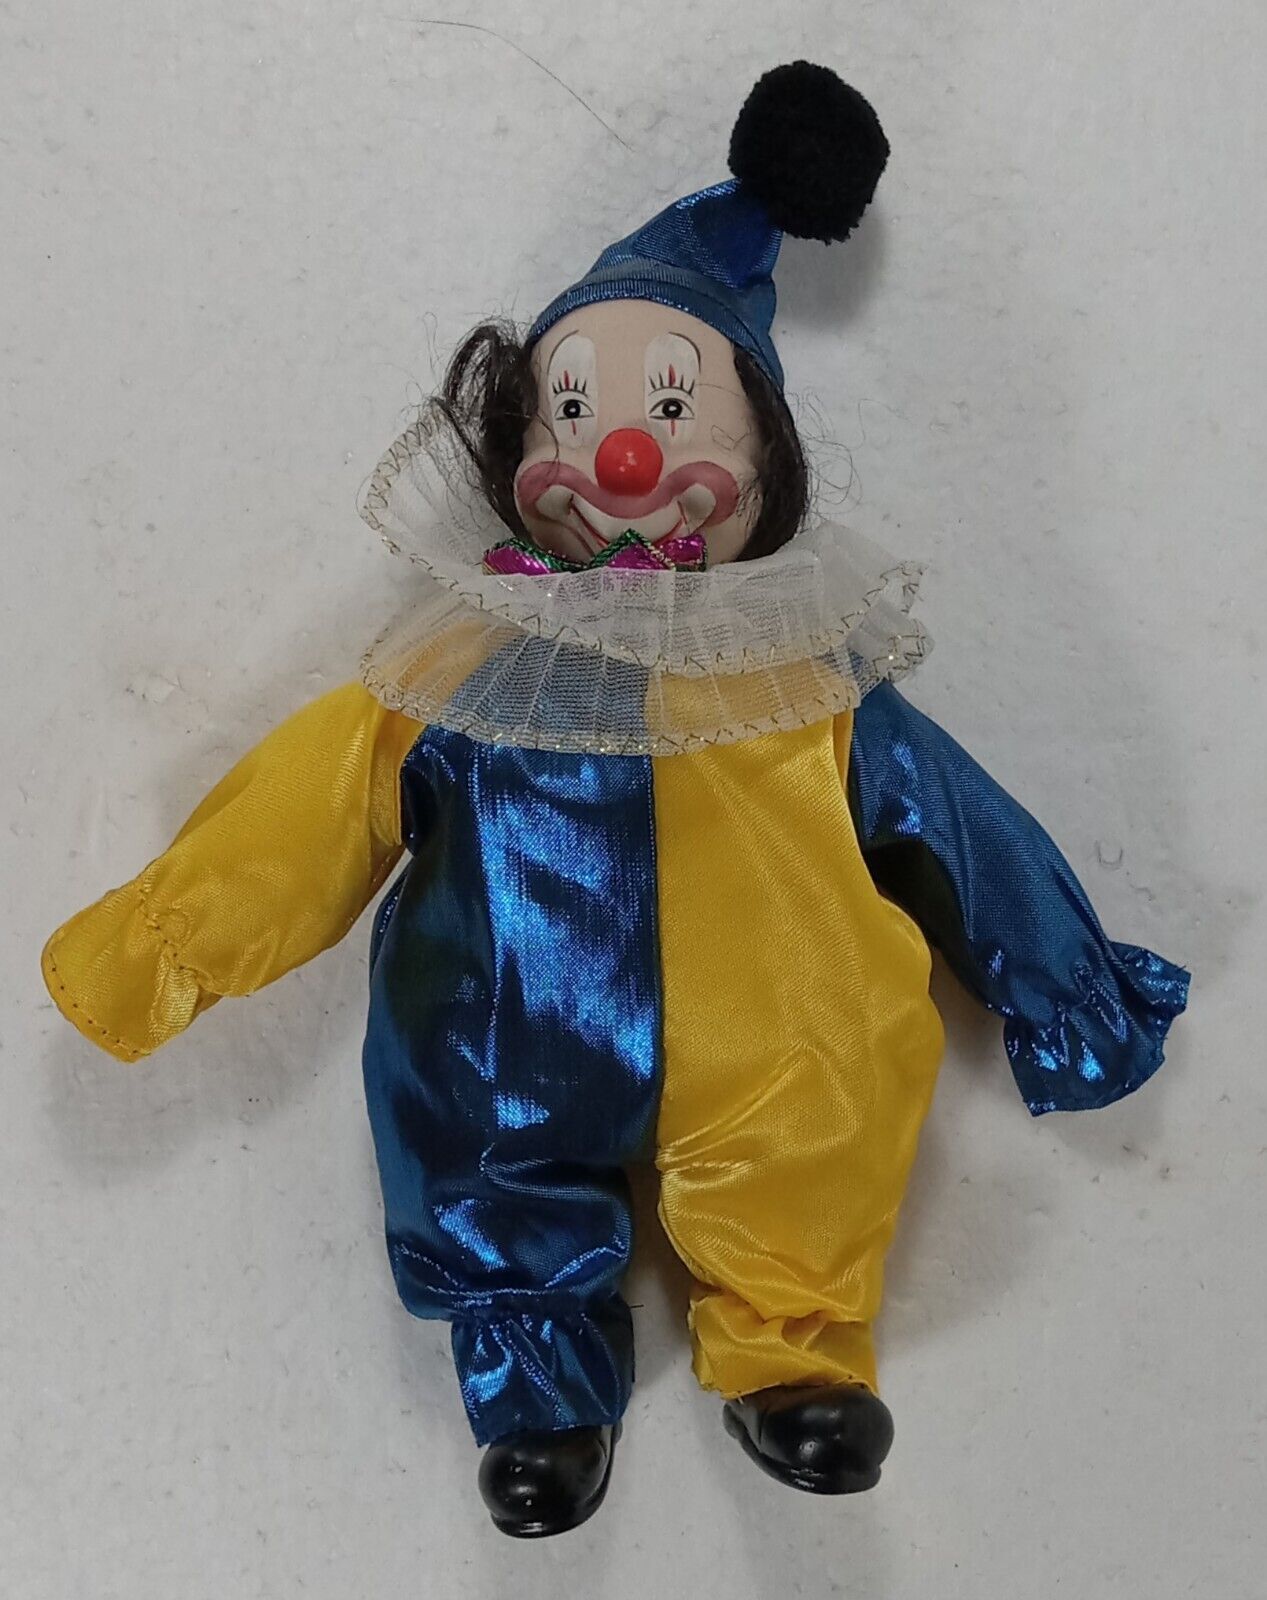 Victoria Impex Clown Doll VTG Bisque Jester Blue Yellow Soft Body Porcelain Head